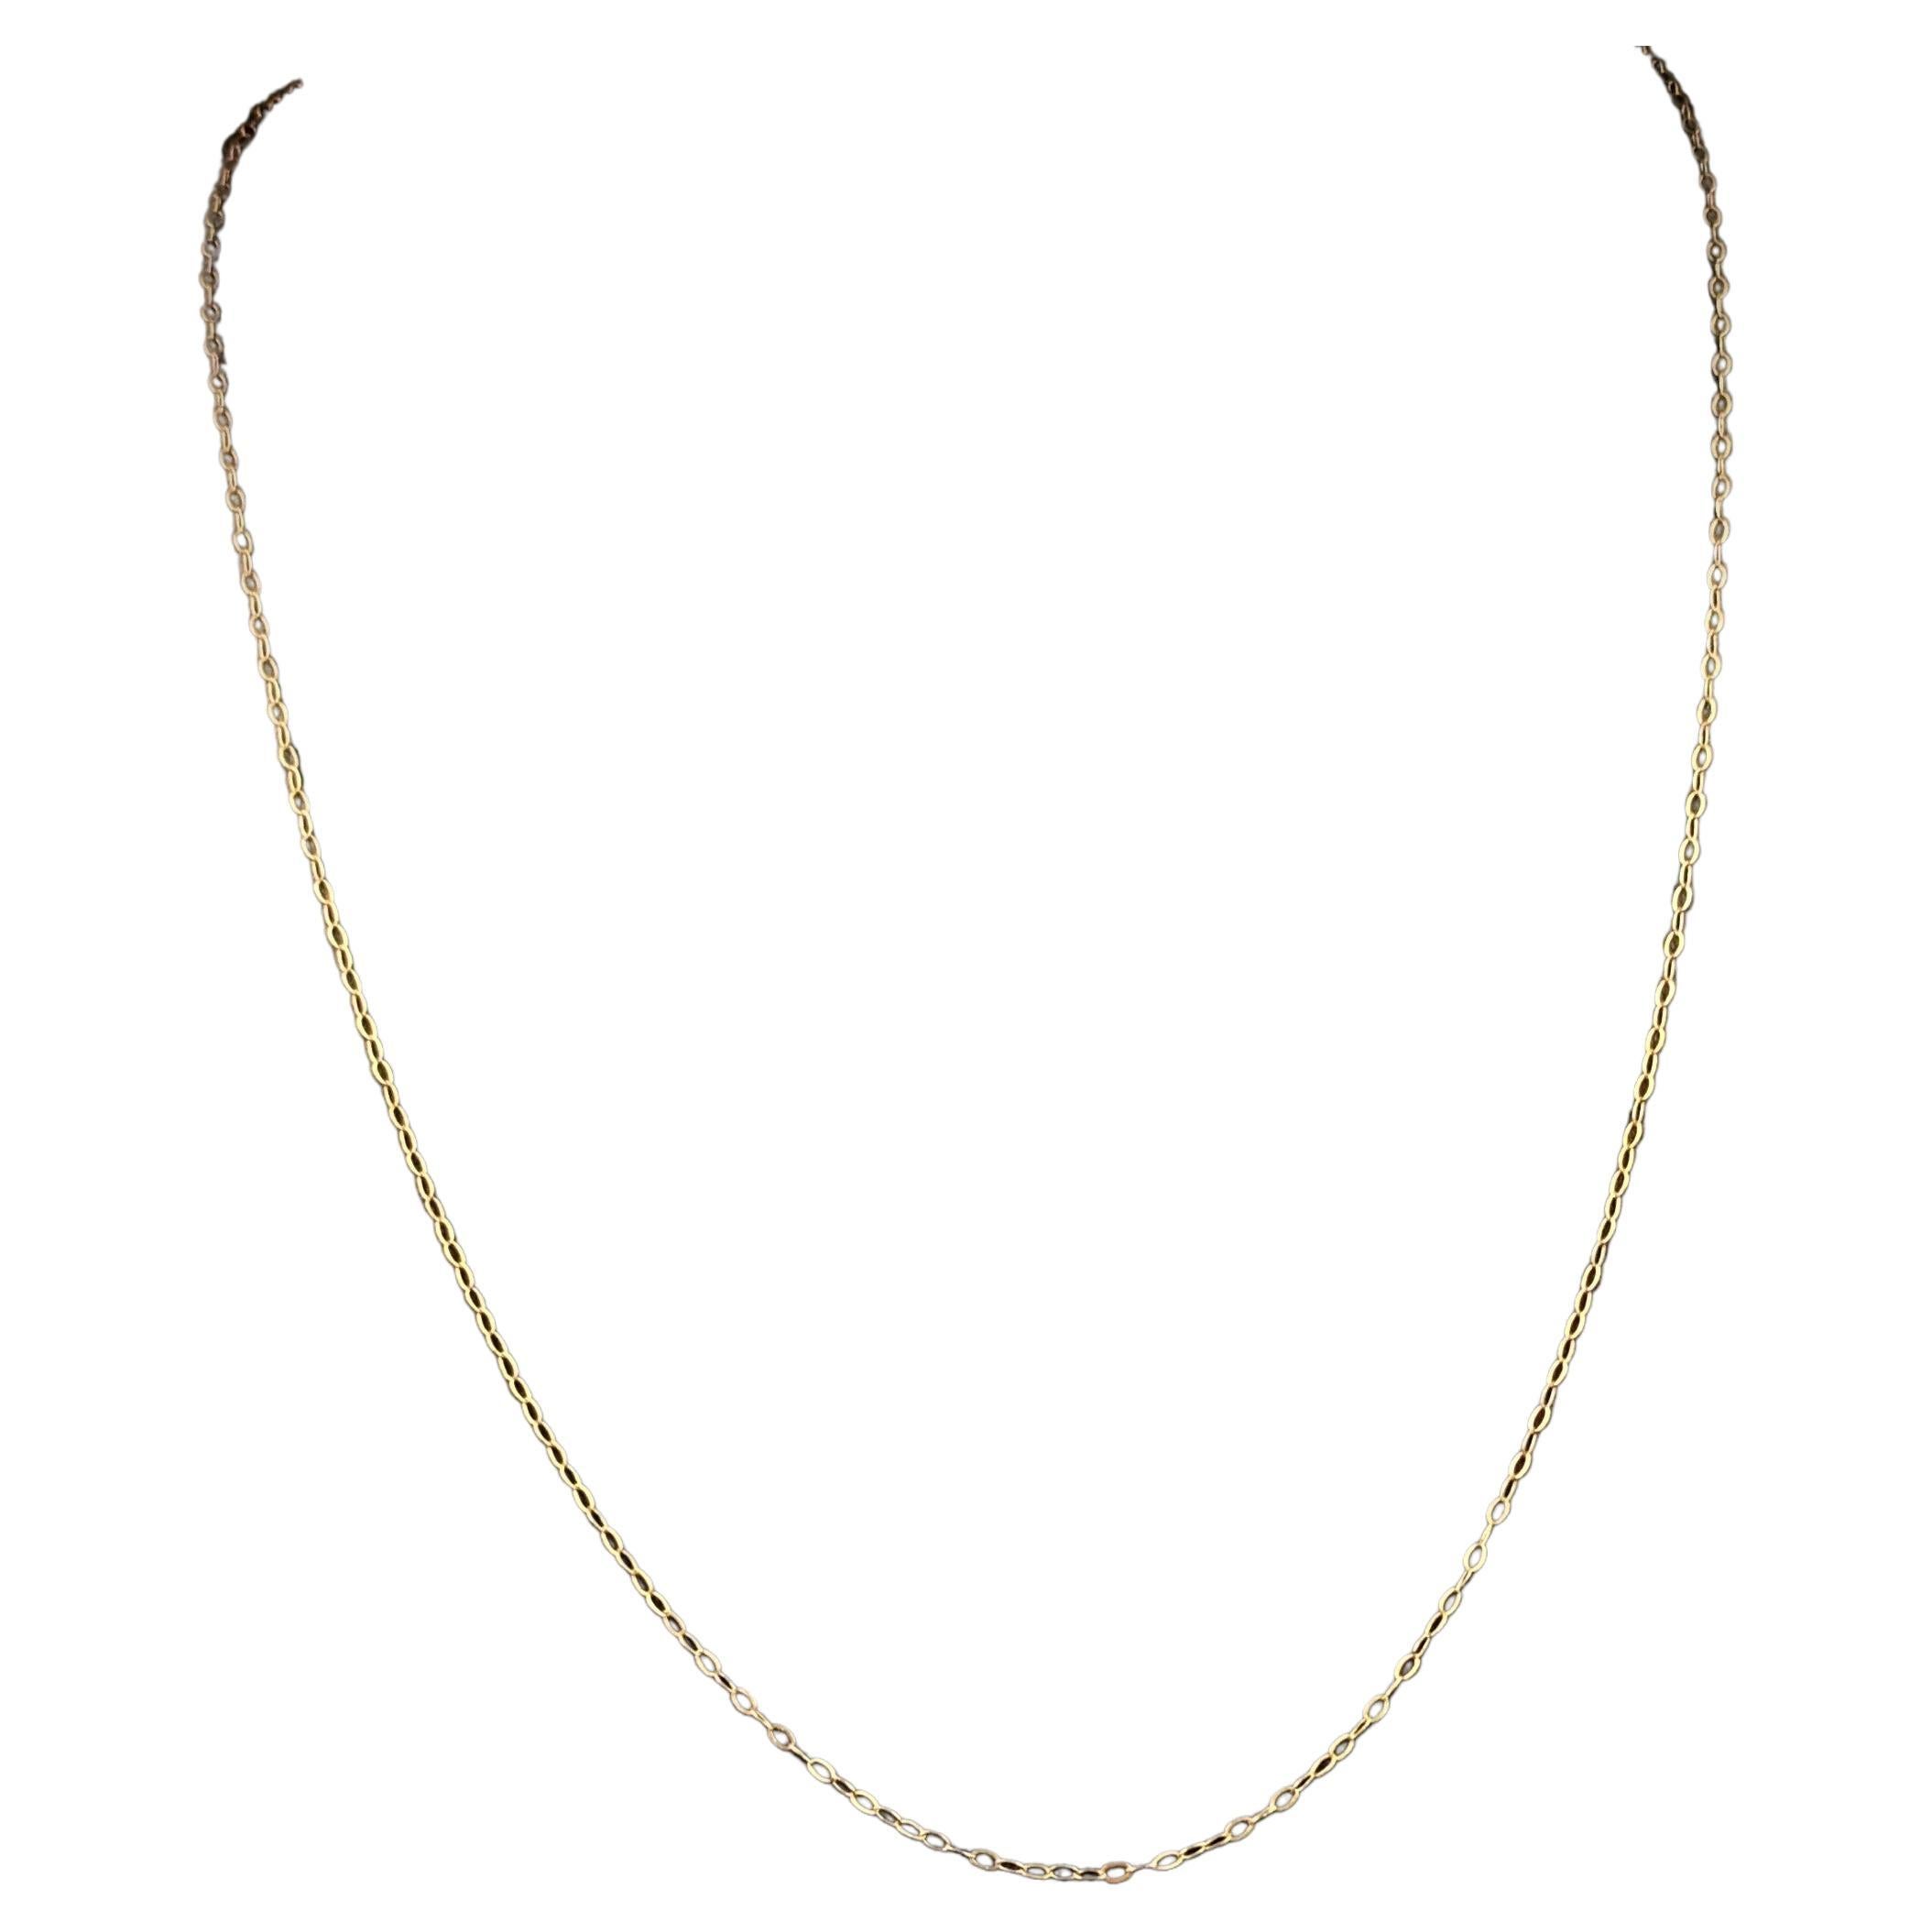 Vintage 9kt gold fine trace link chain necklace, dainty 